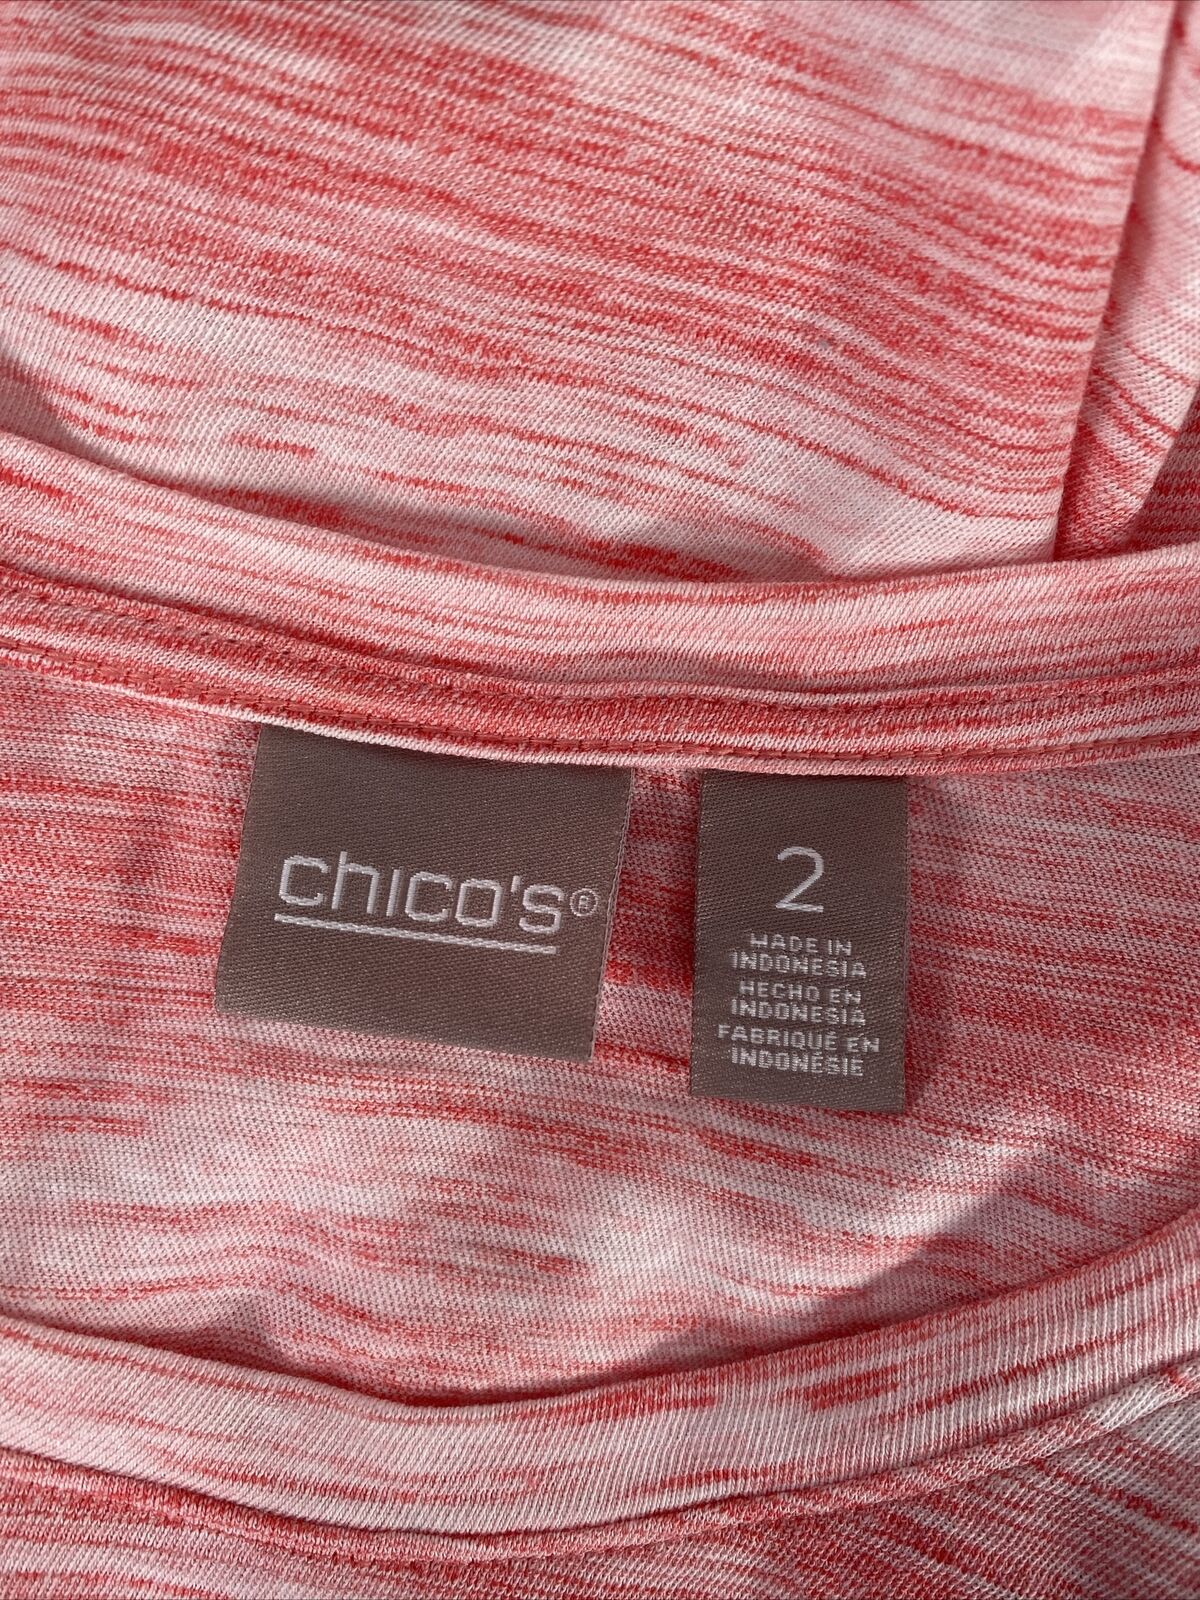 Chico's Camiseta básica de manga corta rosa para mujer 2/US L